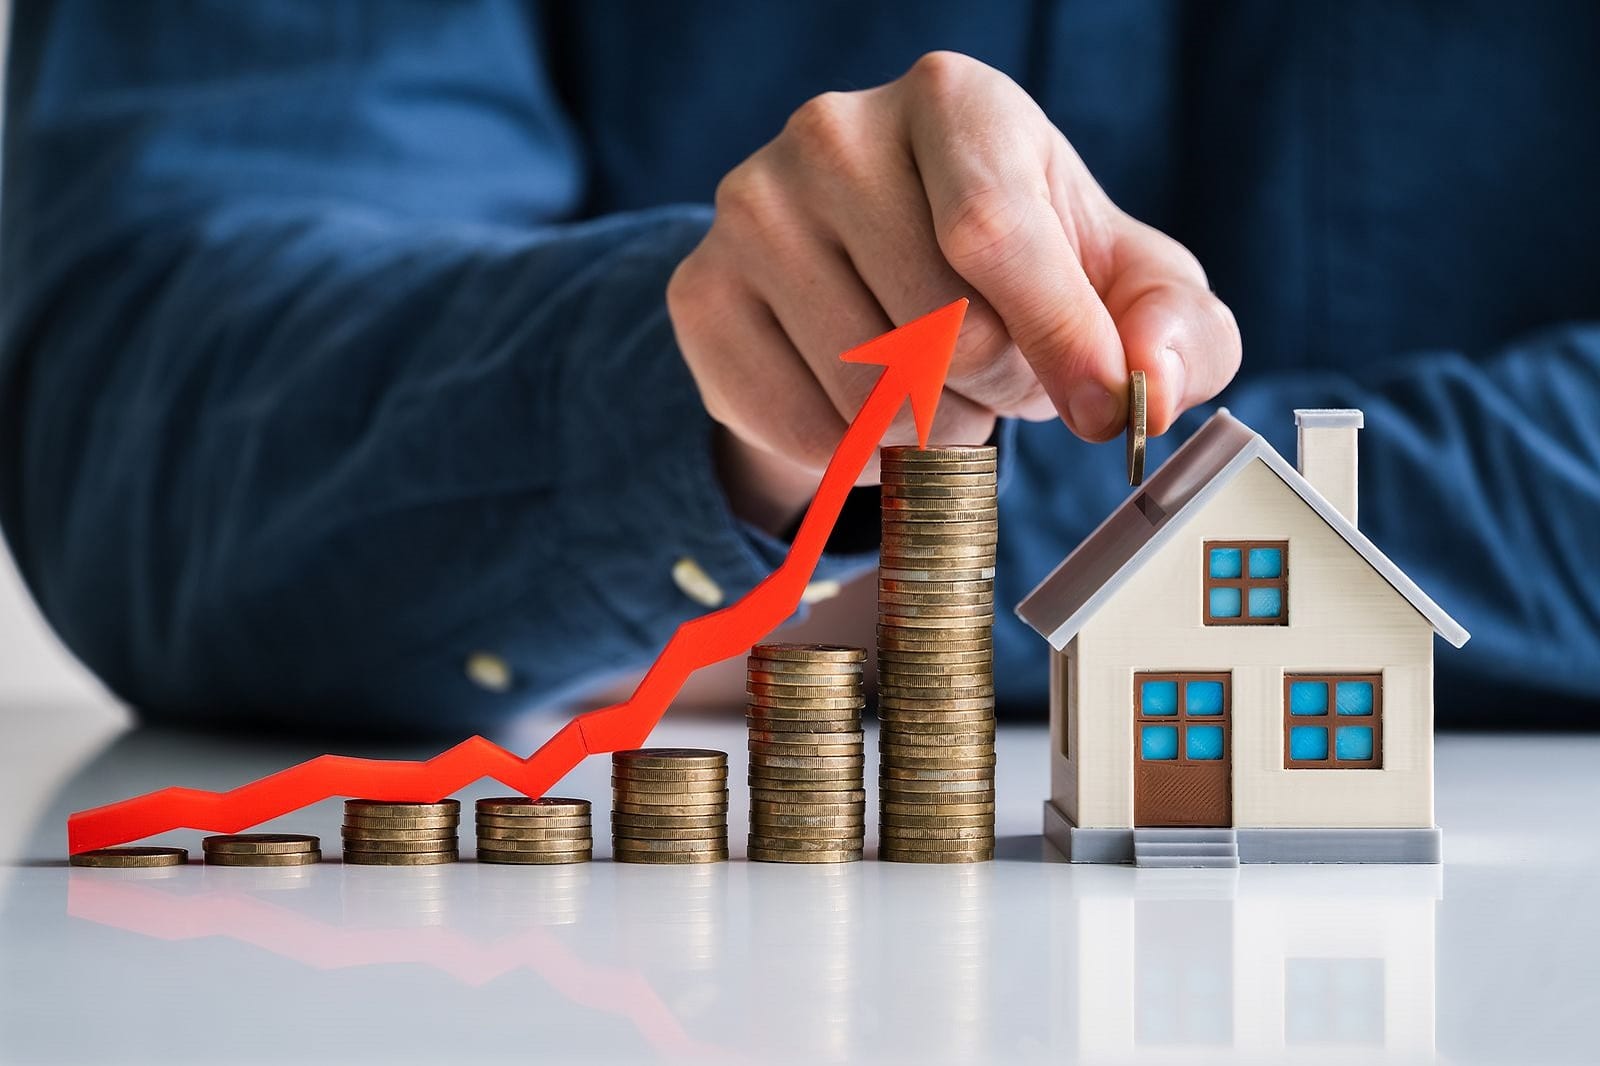 omxs30 investing in real estate